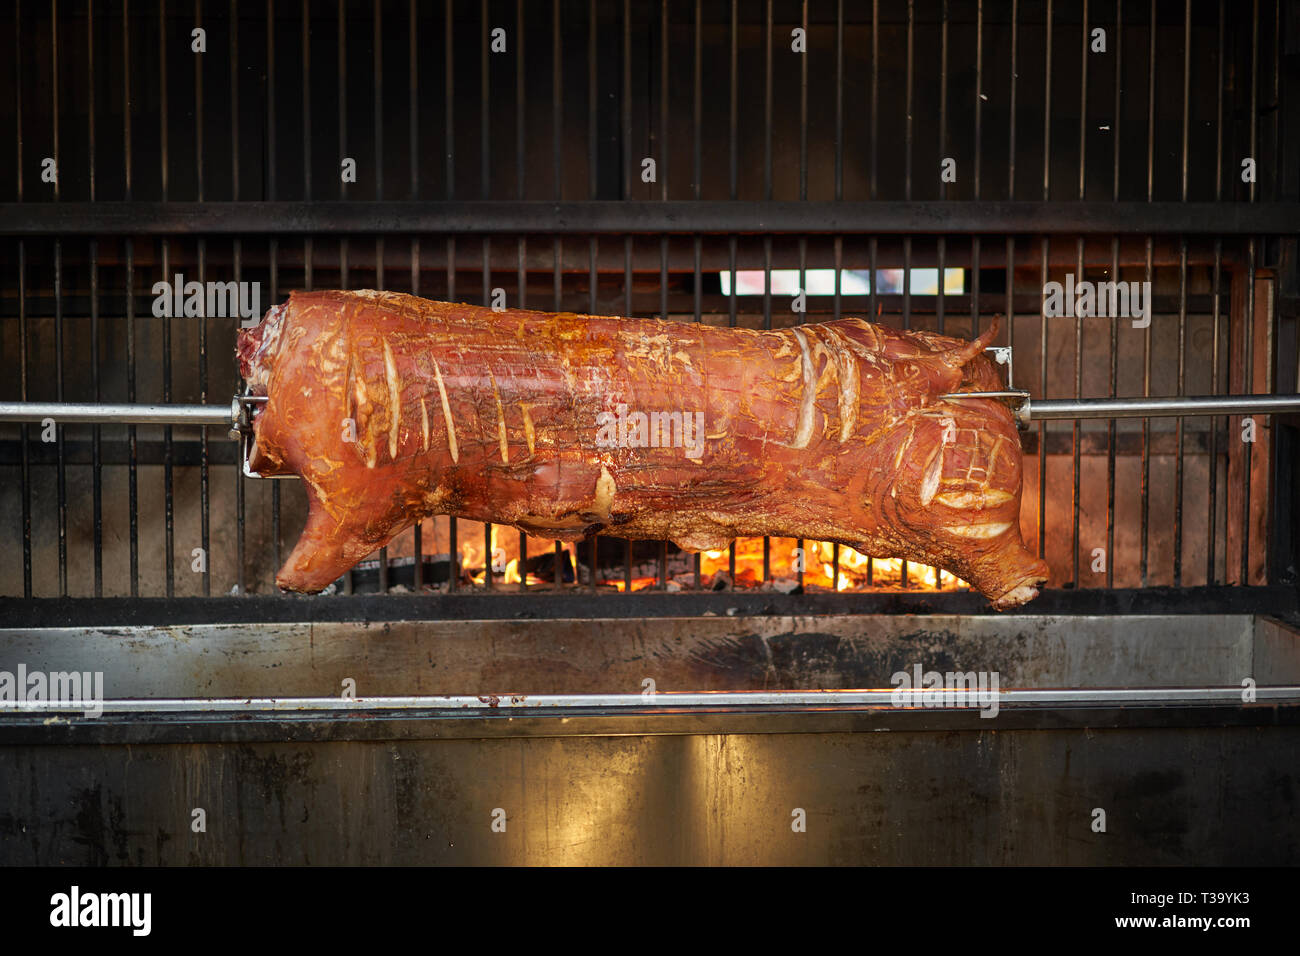 Whole hog on a roaster. Landscape format. Stock Photo